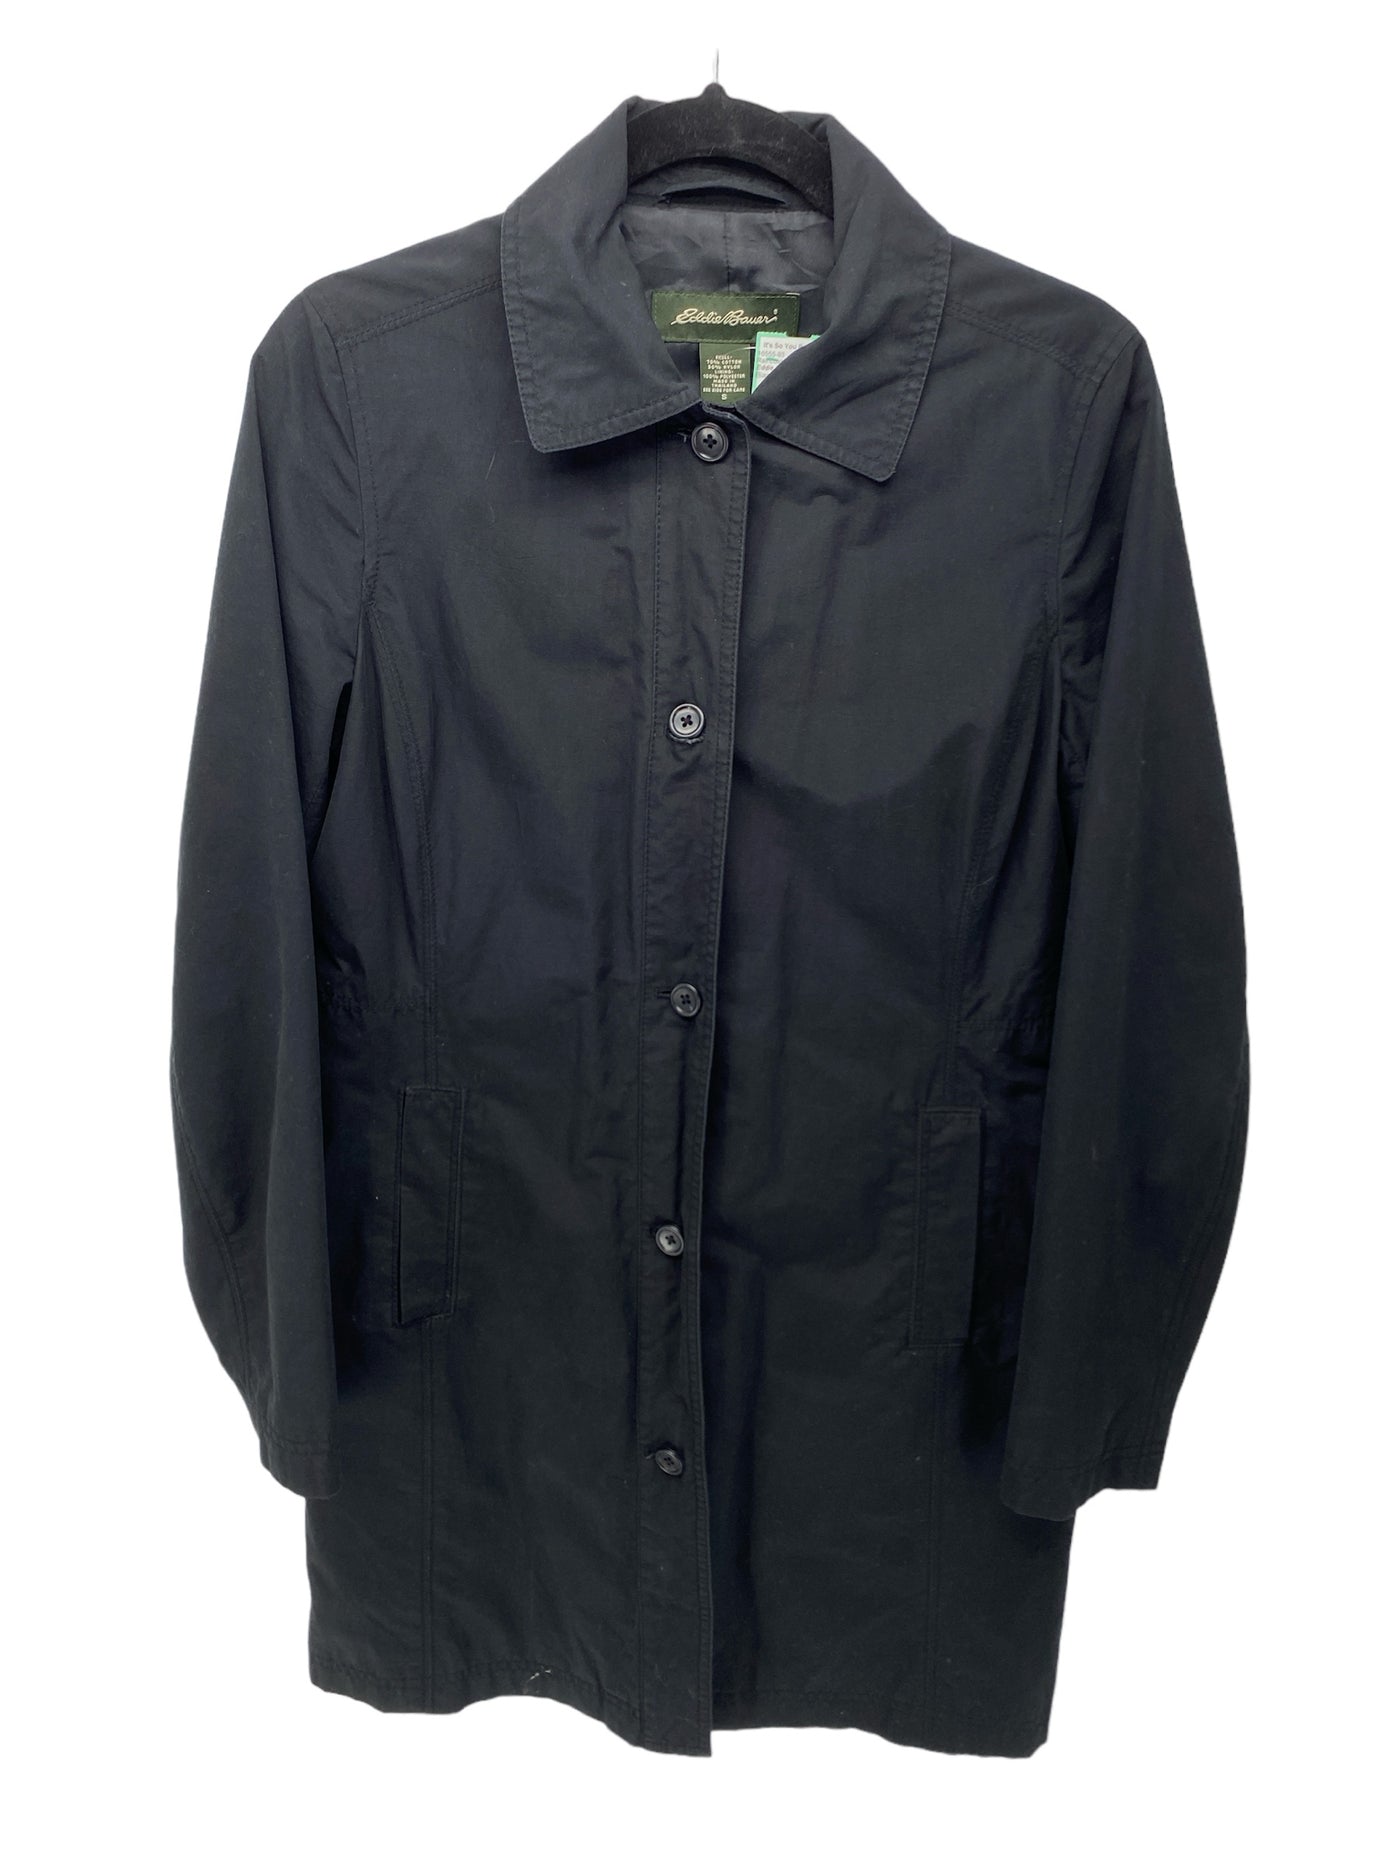 Eddie Bauer Misses Size Small Black Raincoat